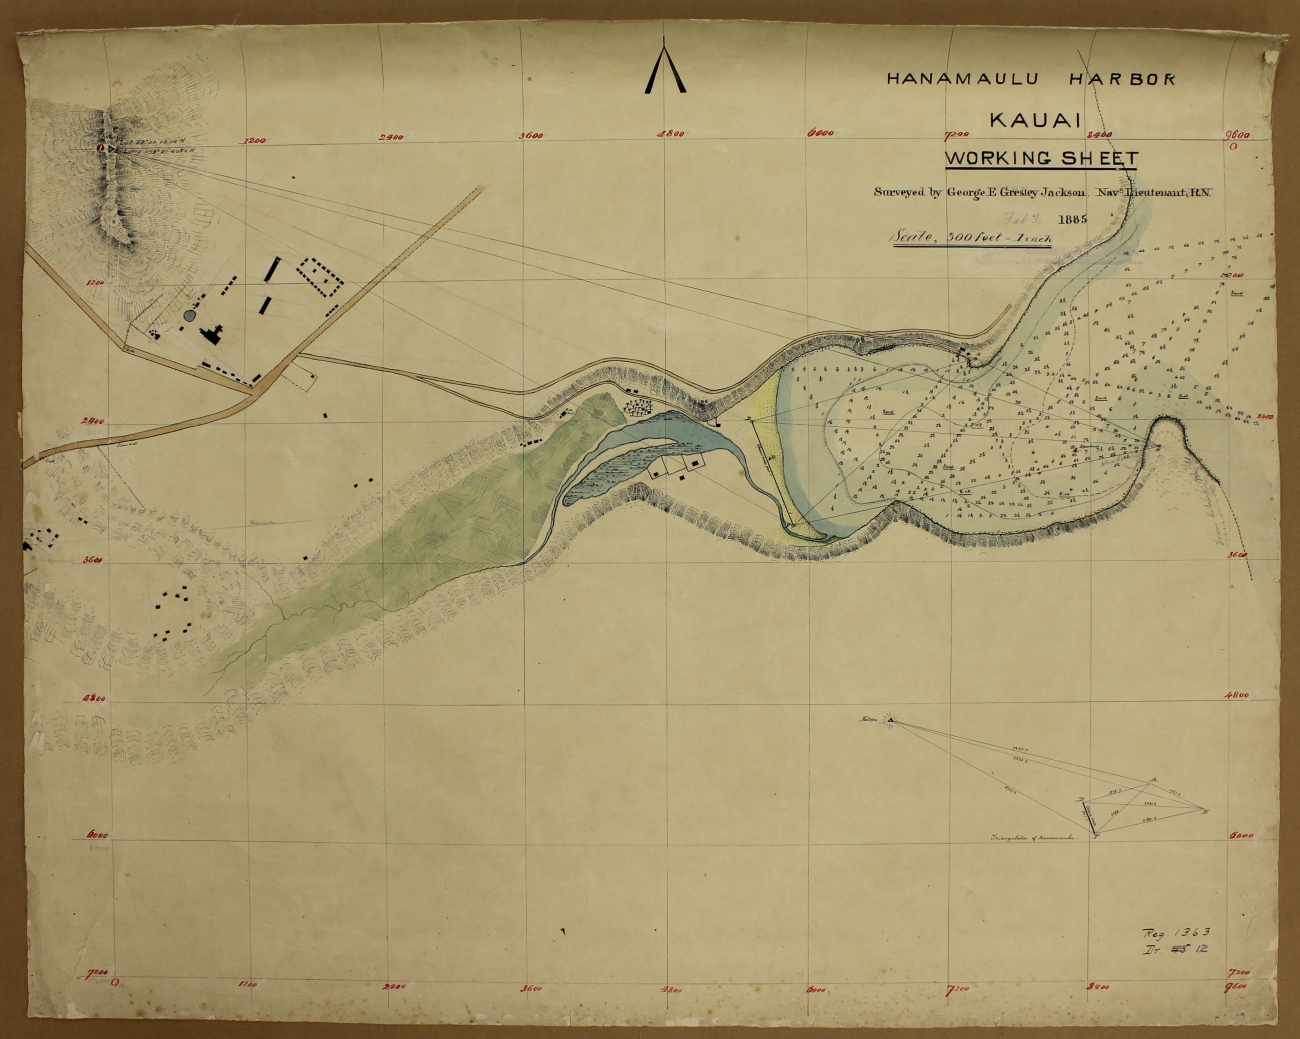 Hydrographic survey of Hanamaulu Harbor by George E